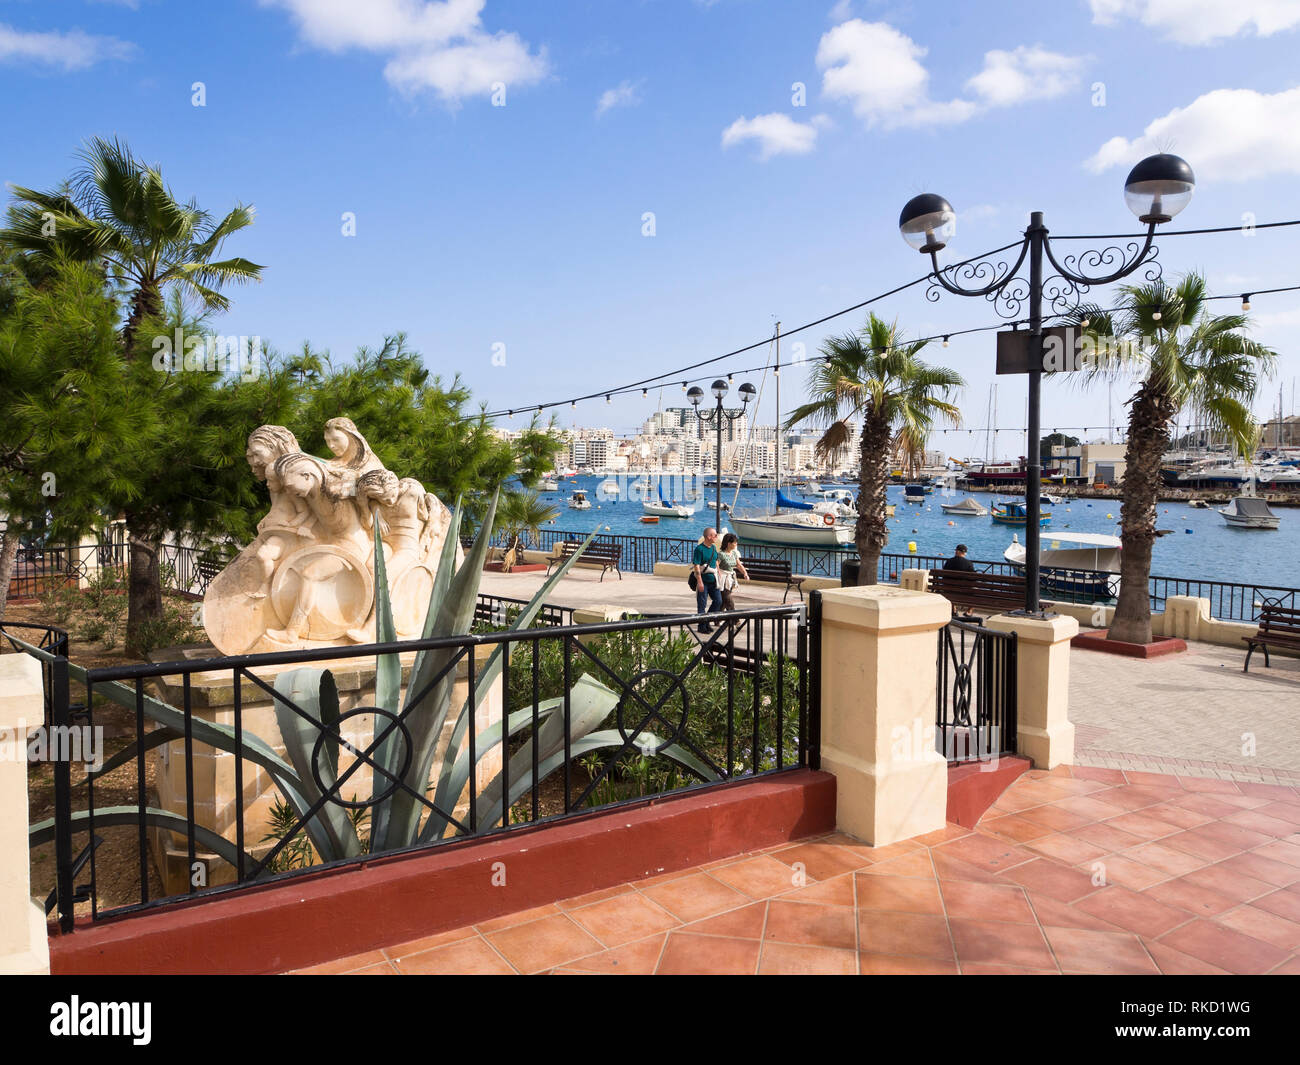 Seafront promenade in the Sliema district near Valetta in malta, sunny and inviting for a morning walk Stock Photo